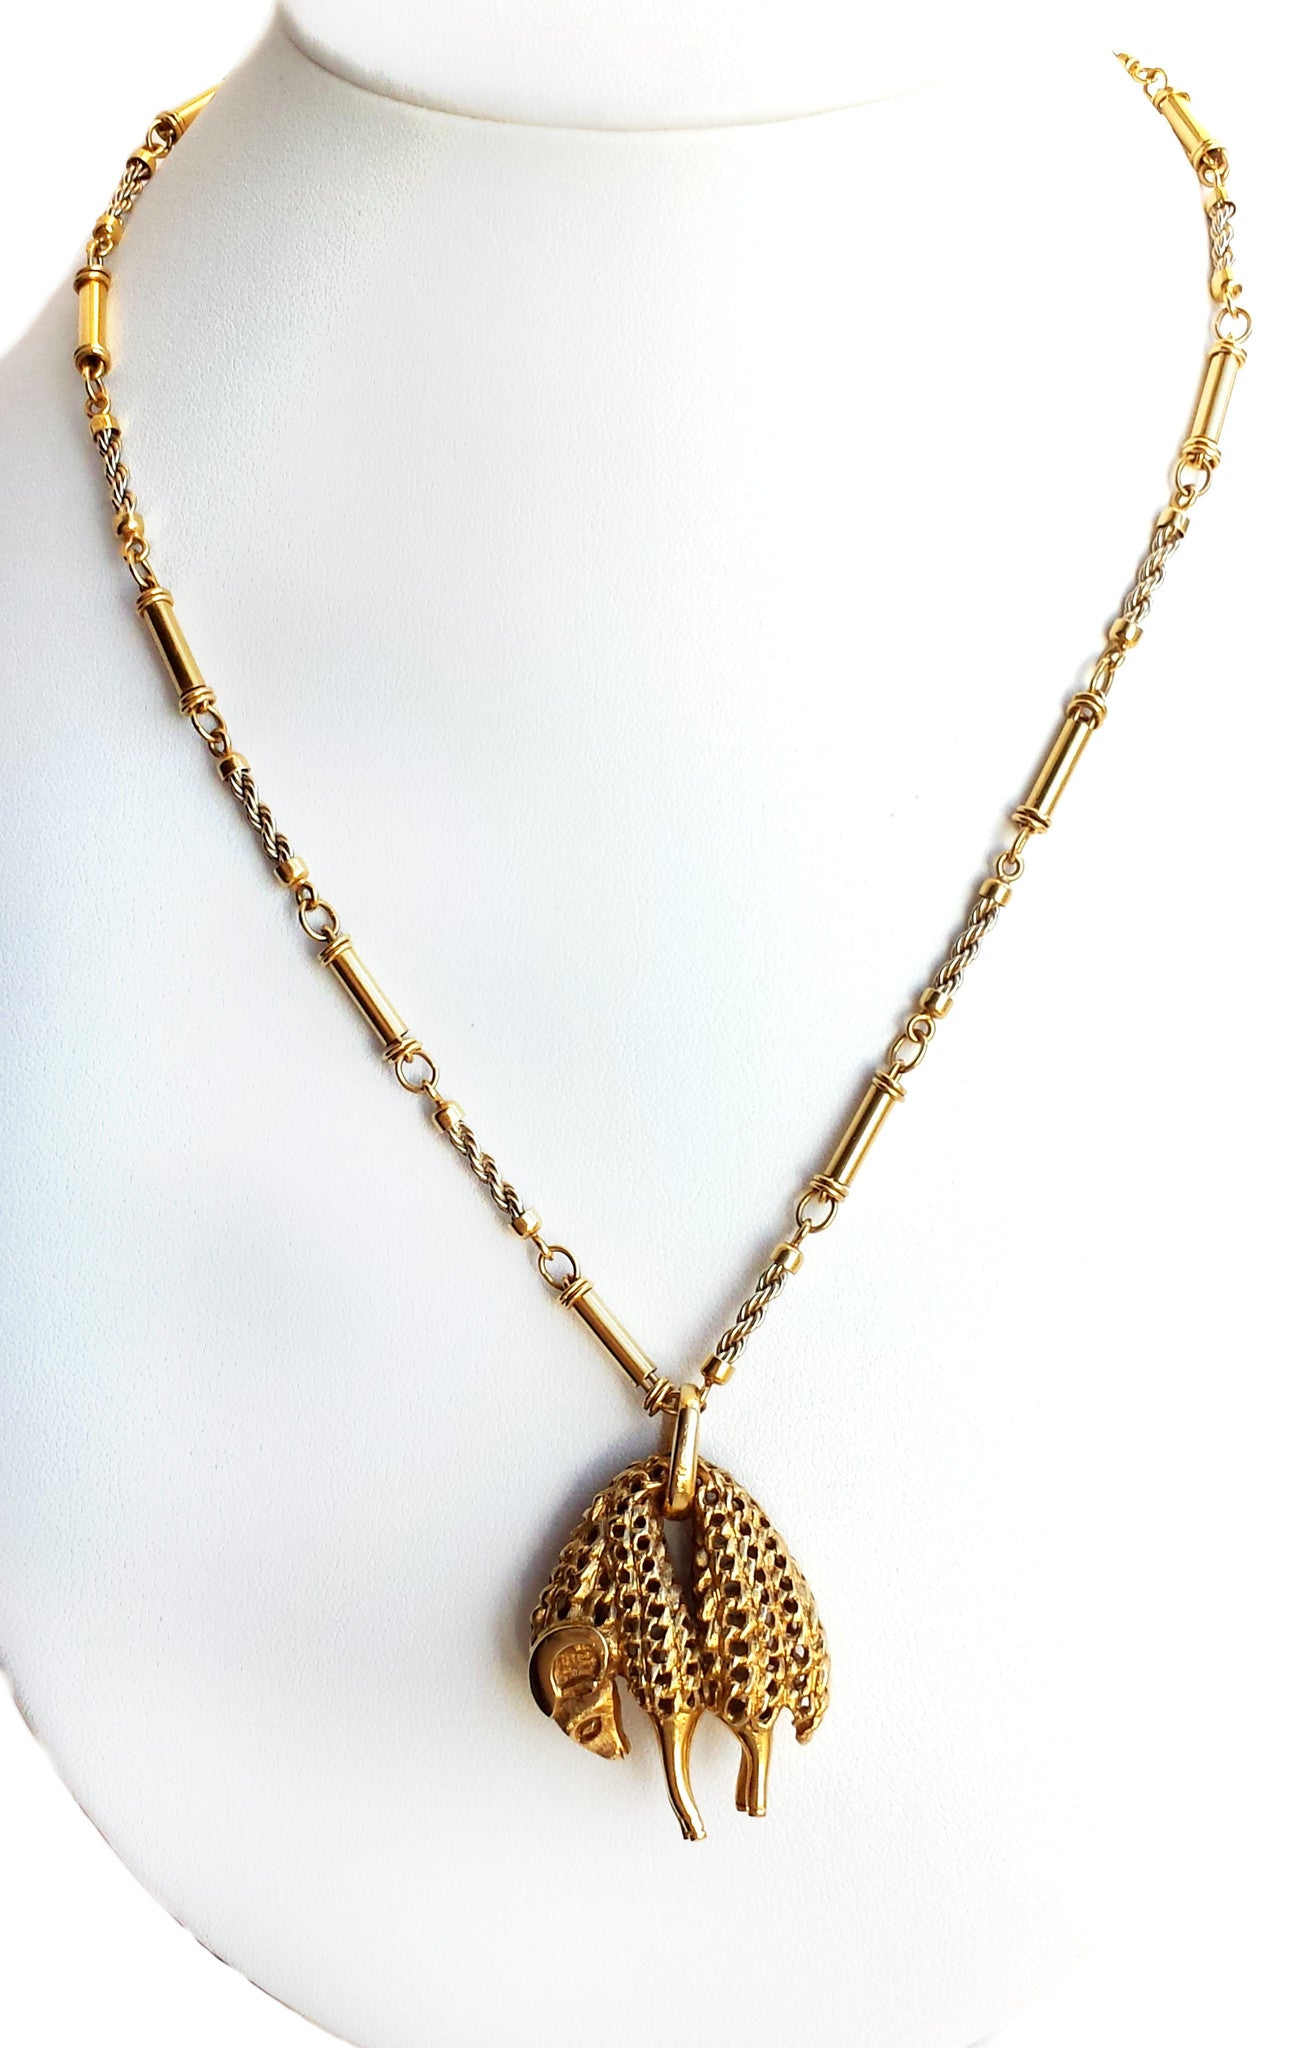 vintage cartier necklace jewelry